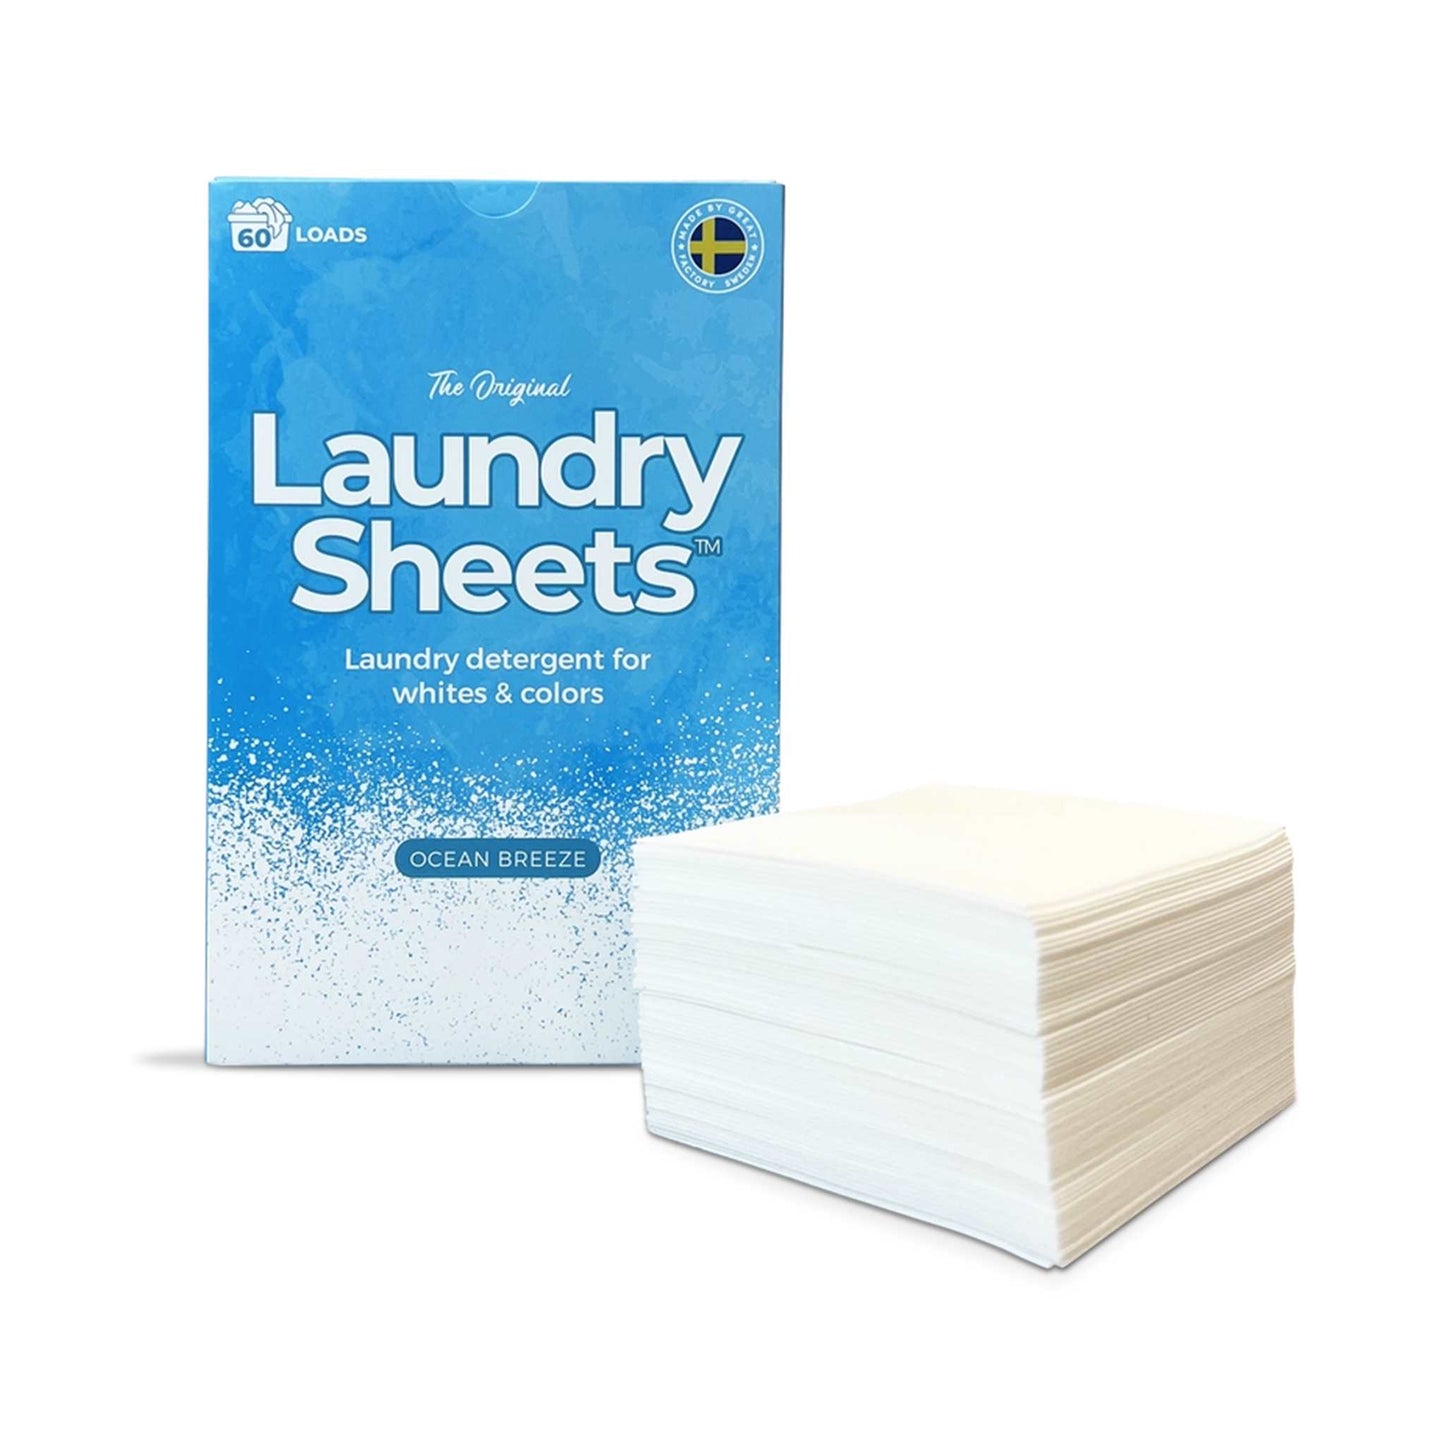 Laundry Sheets Laundry 60-Loads - Ocean Breeze Laundry Sheets - Laundry Detergent